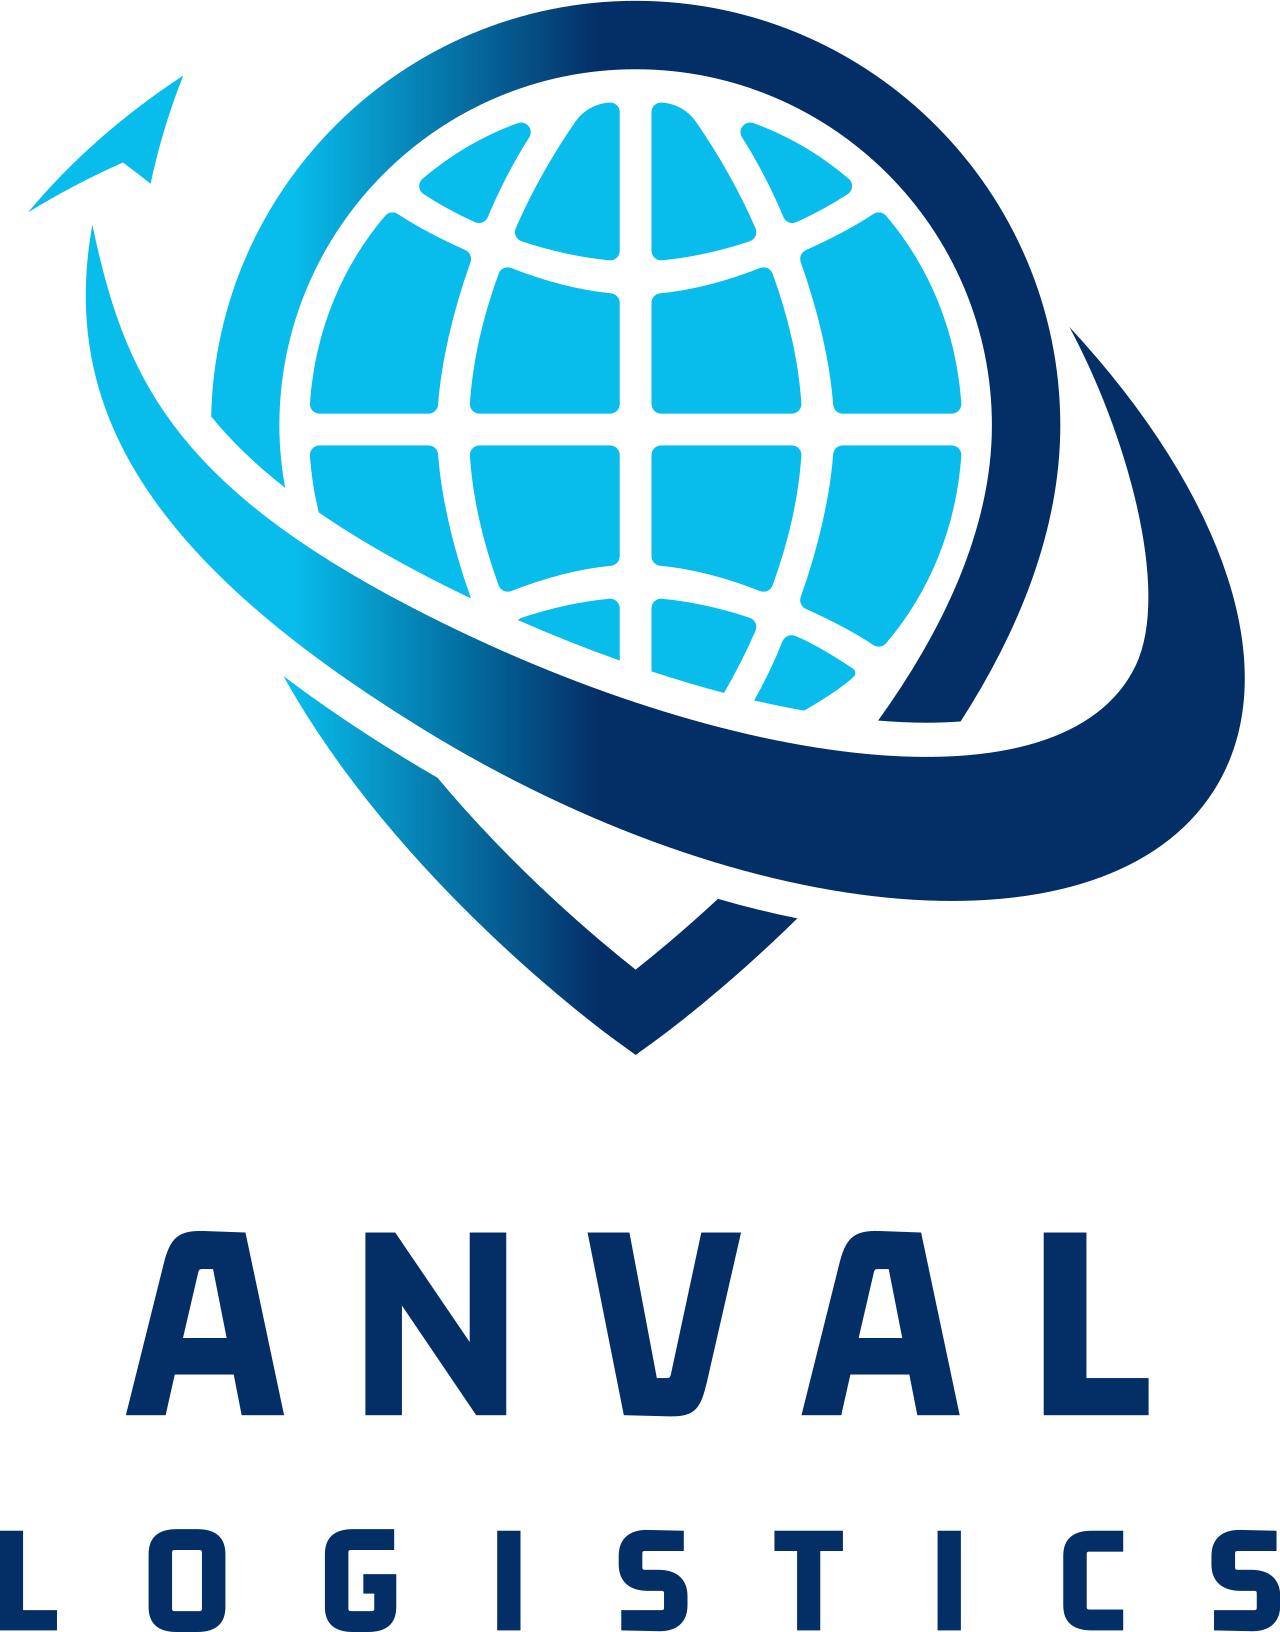 ANVAL's logo